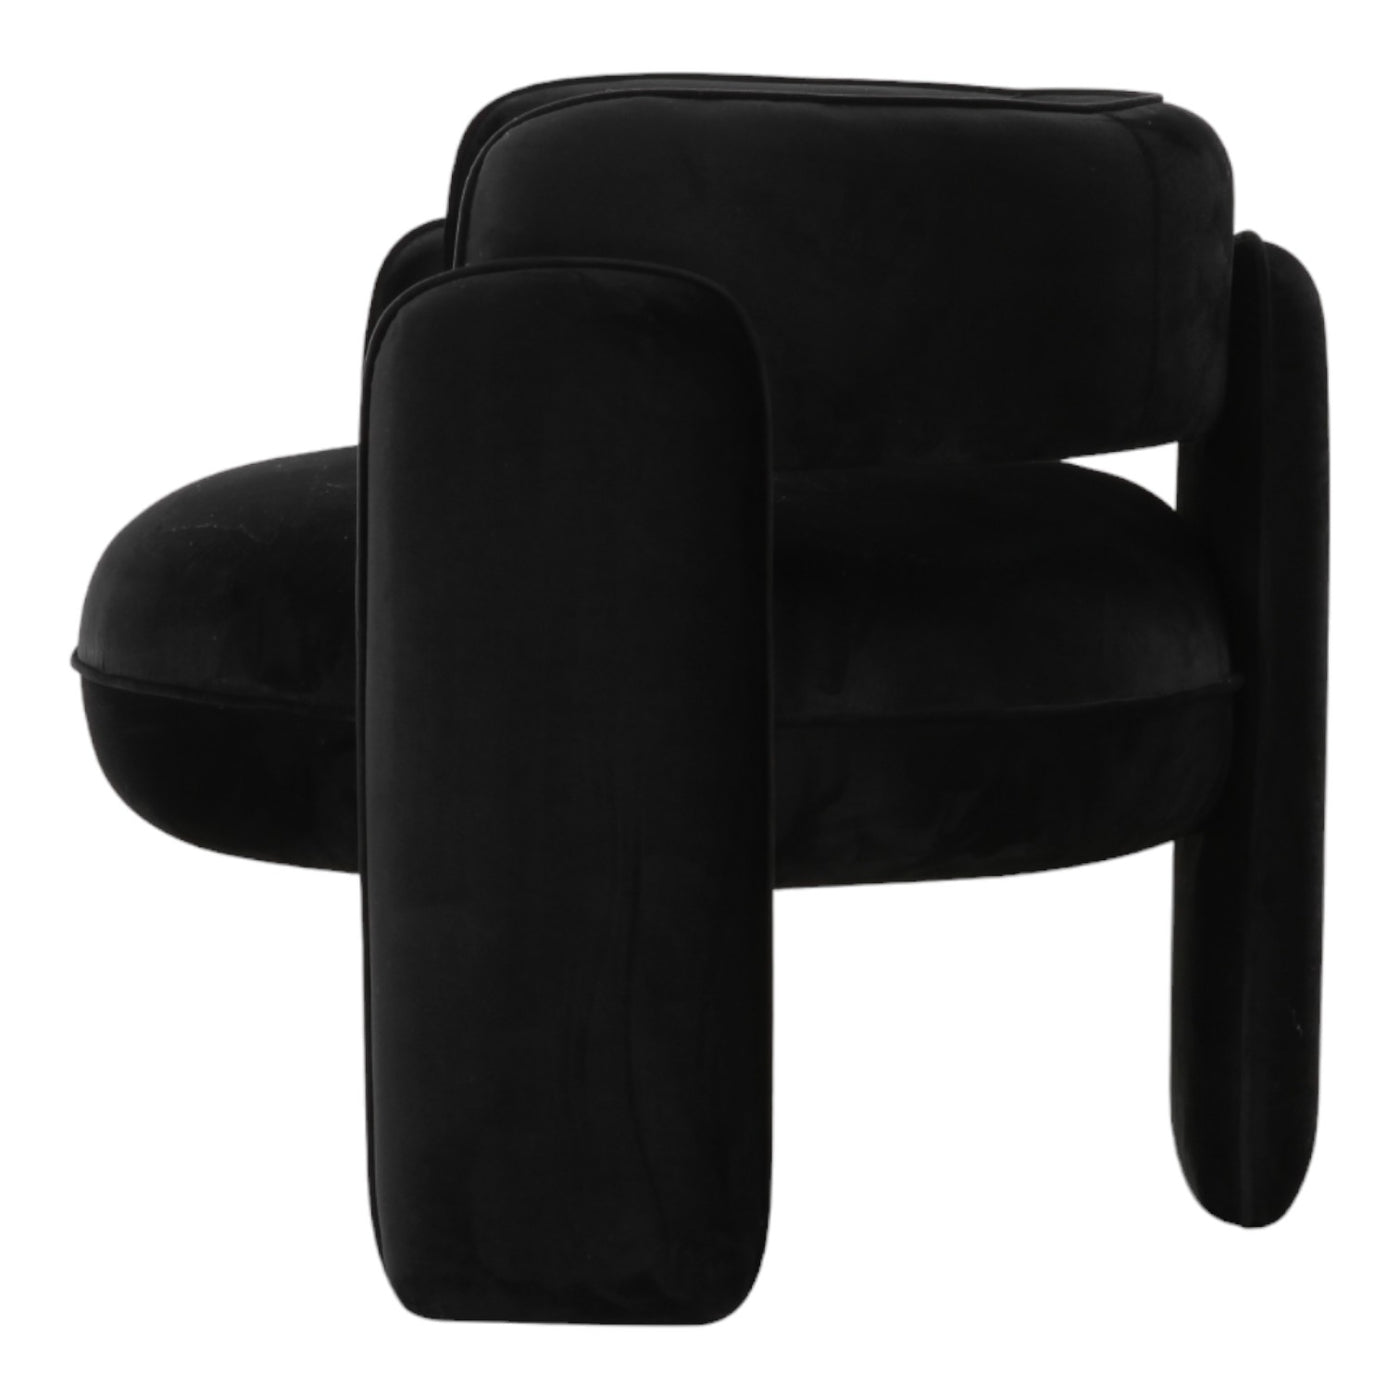 Chilli Chair Black